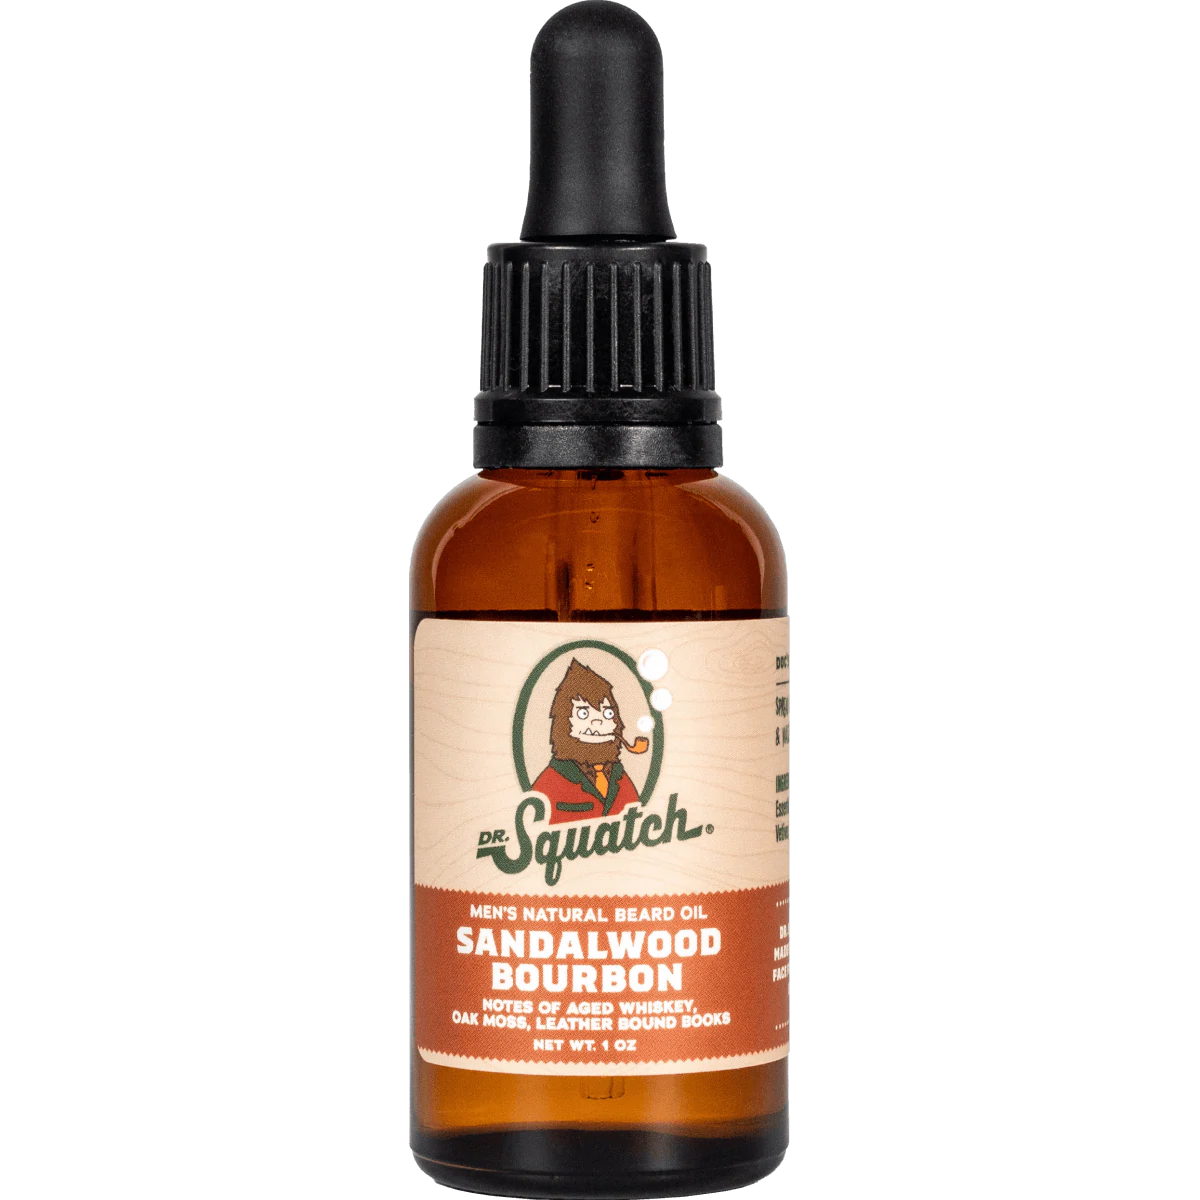 Dr. Squatch Sandalwood Bourbon Beard Oil – The Mix Mercantile